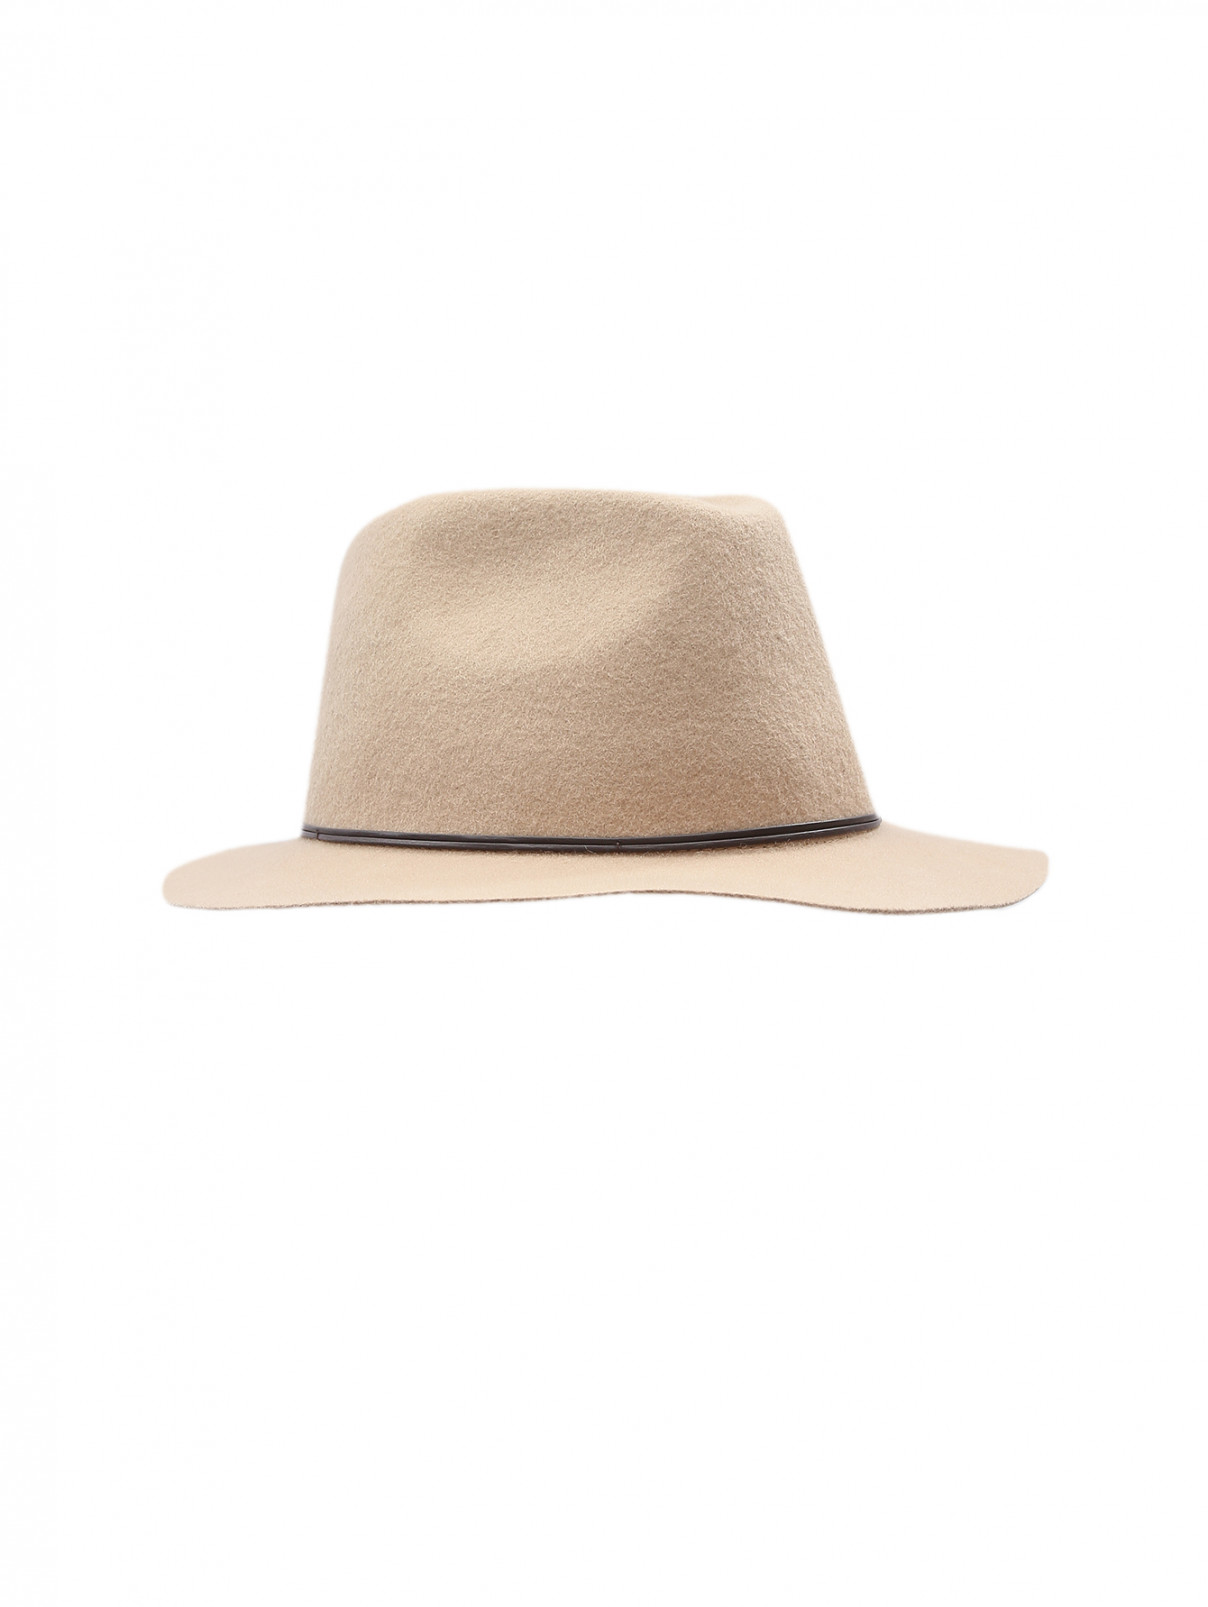 Шляпа из шерсти Weekend Max Mara  –  Общий вид  – Цвет:  Бежевый